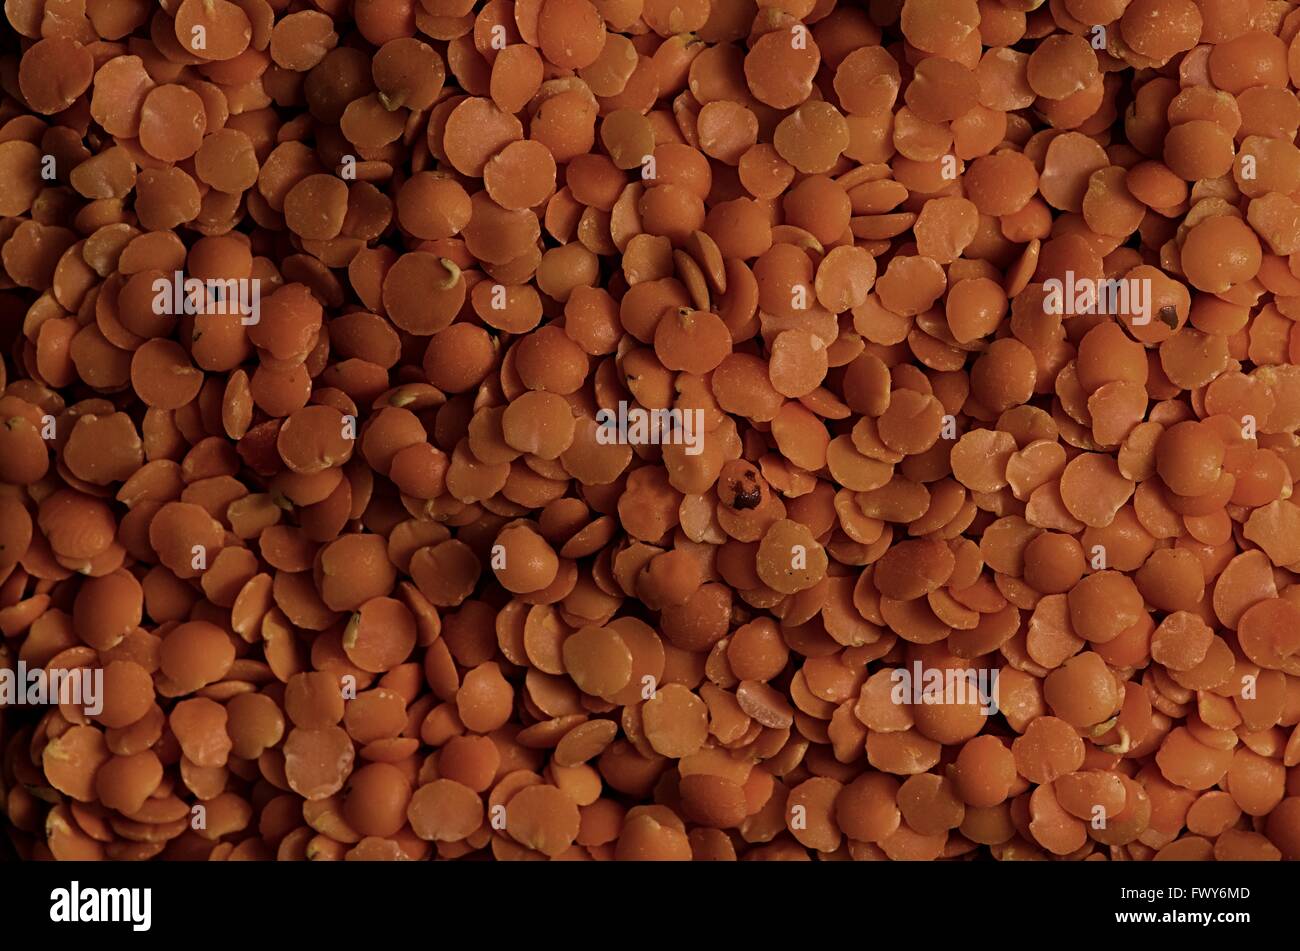 Orange lentils in side light, pattern background Stock Photo